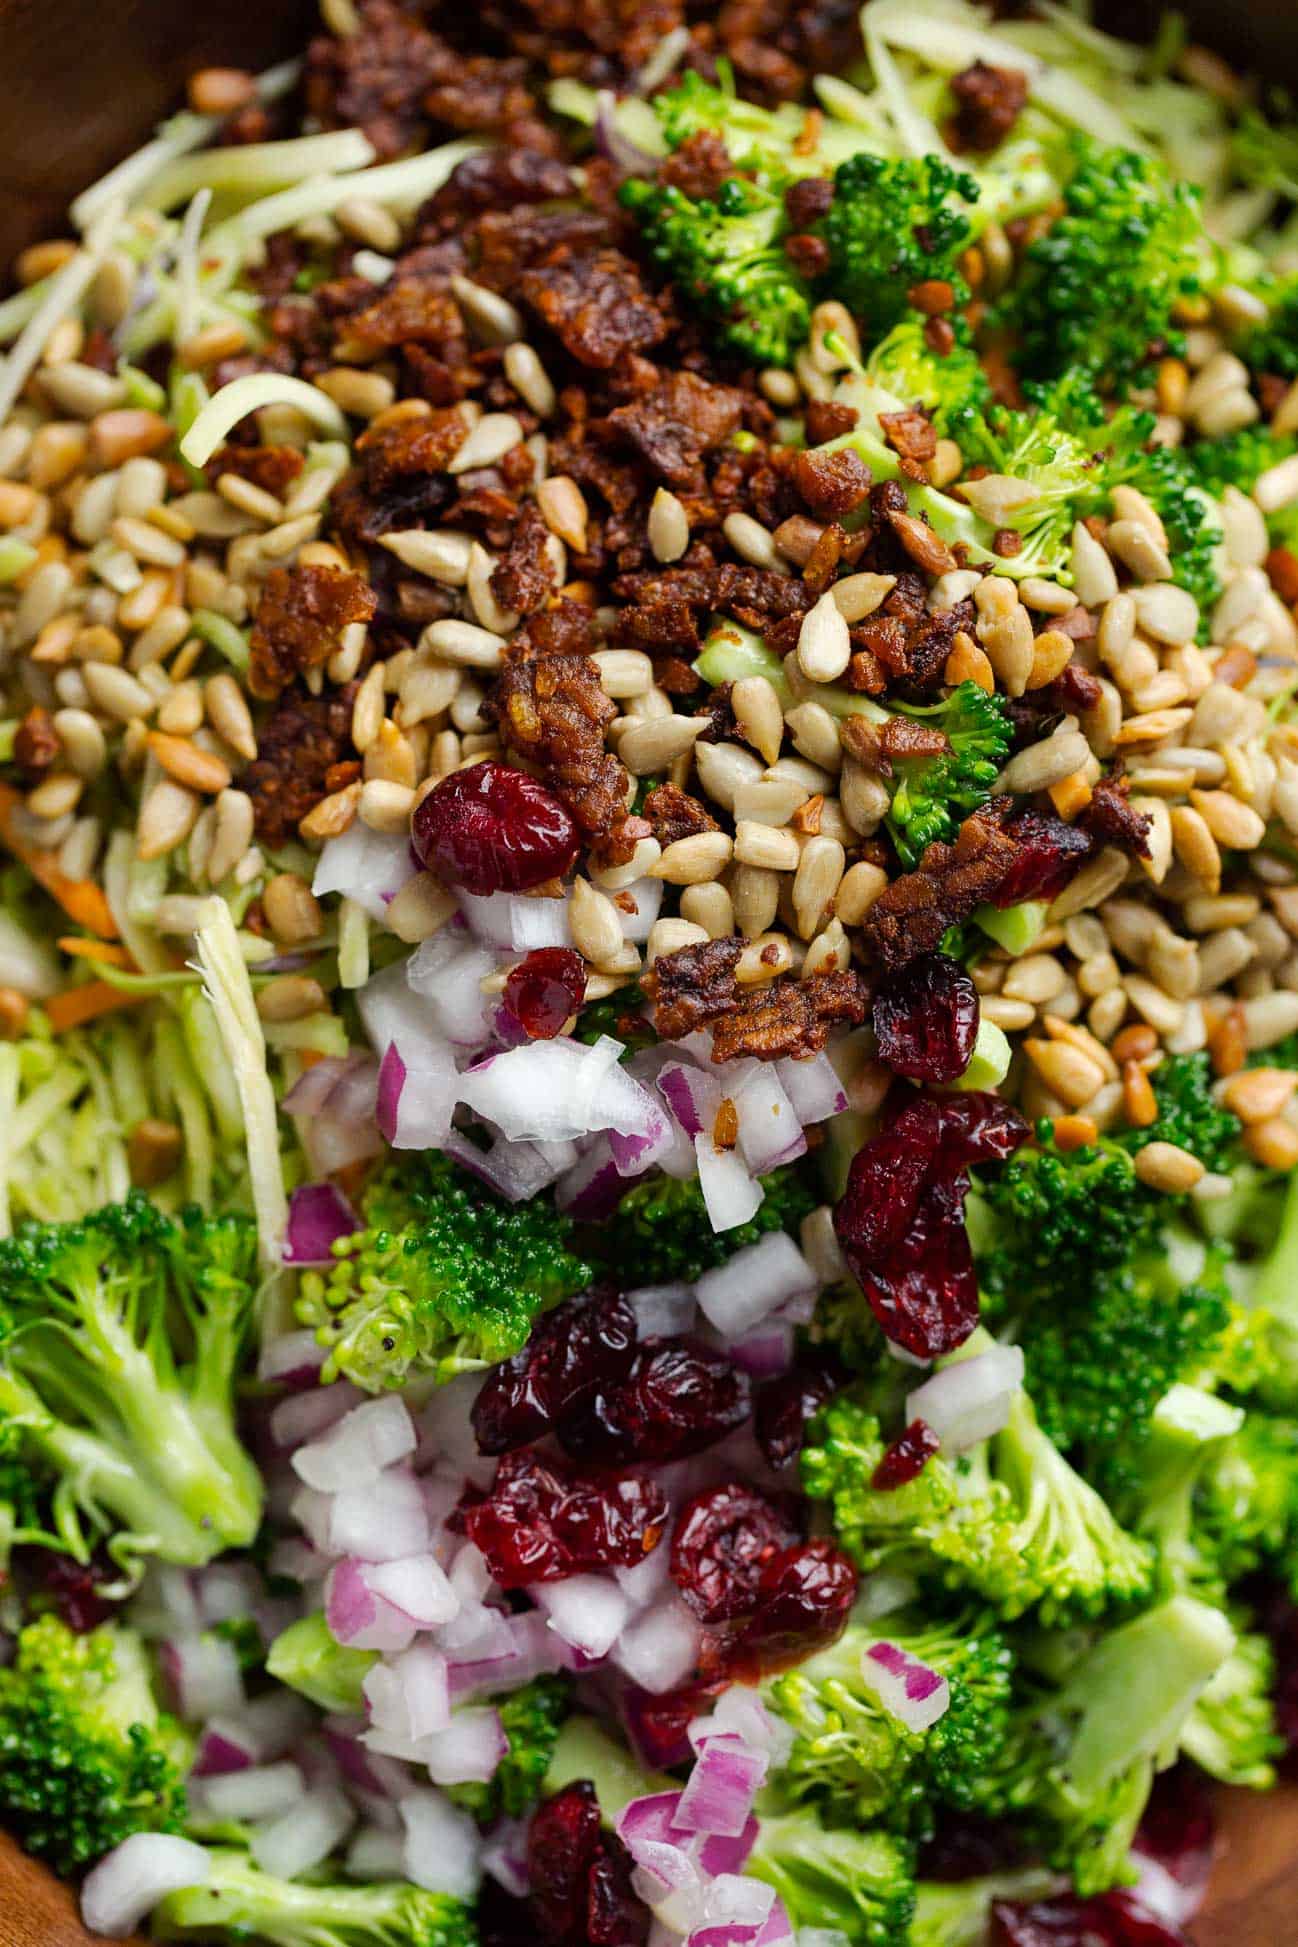 An unmixed bowl of ingredients to make vegan broccoli slaw salad.